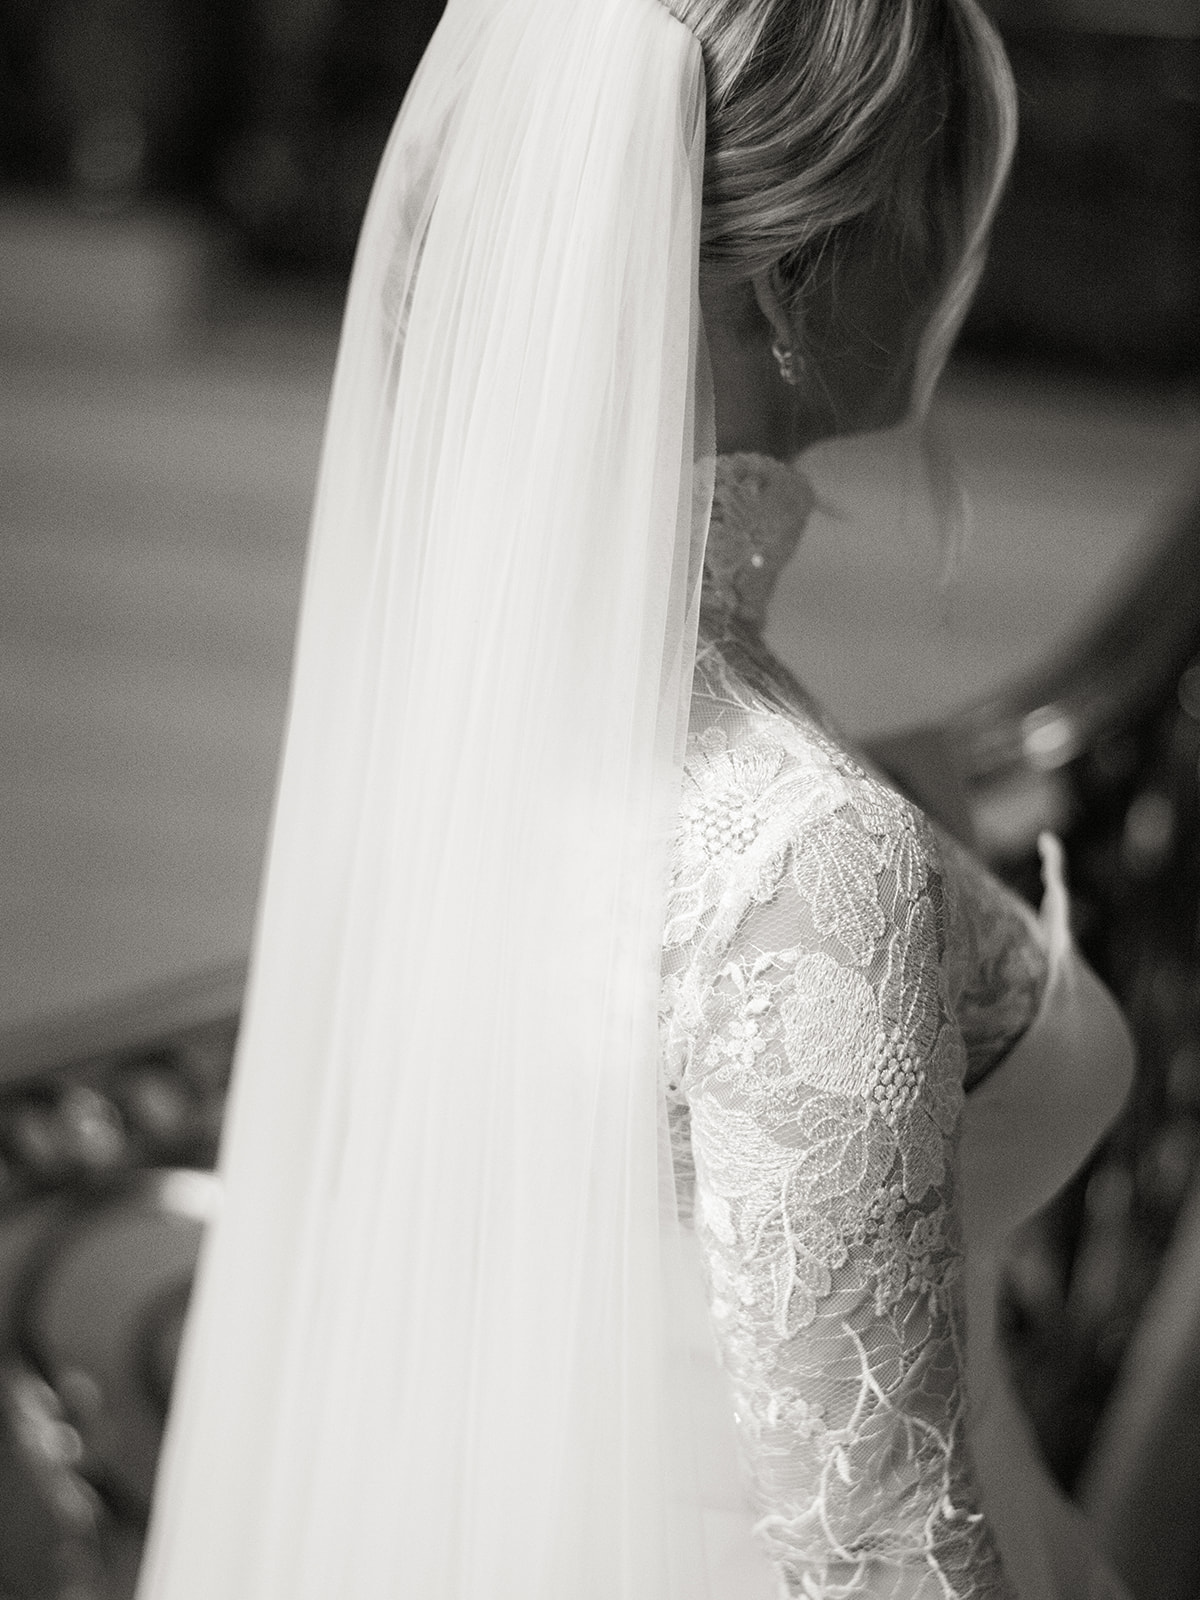 details on the wedding dress